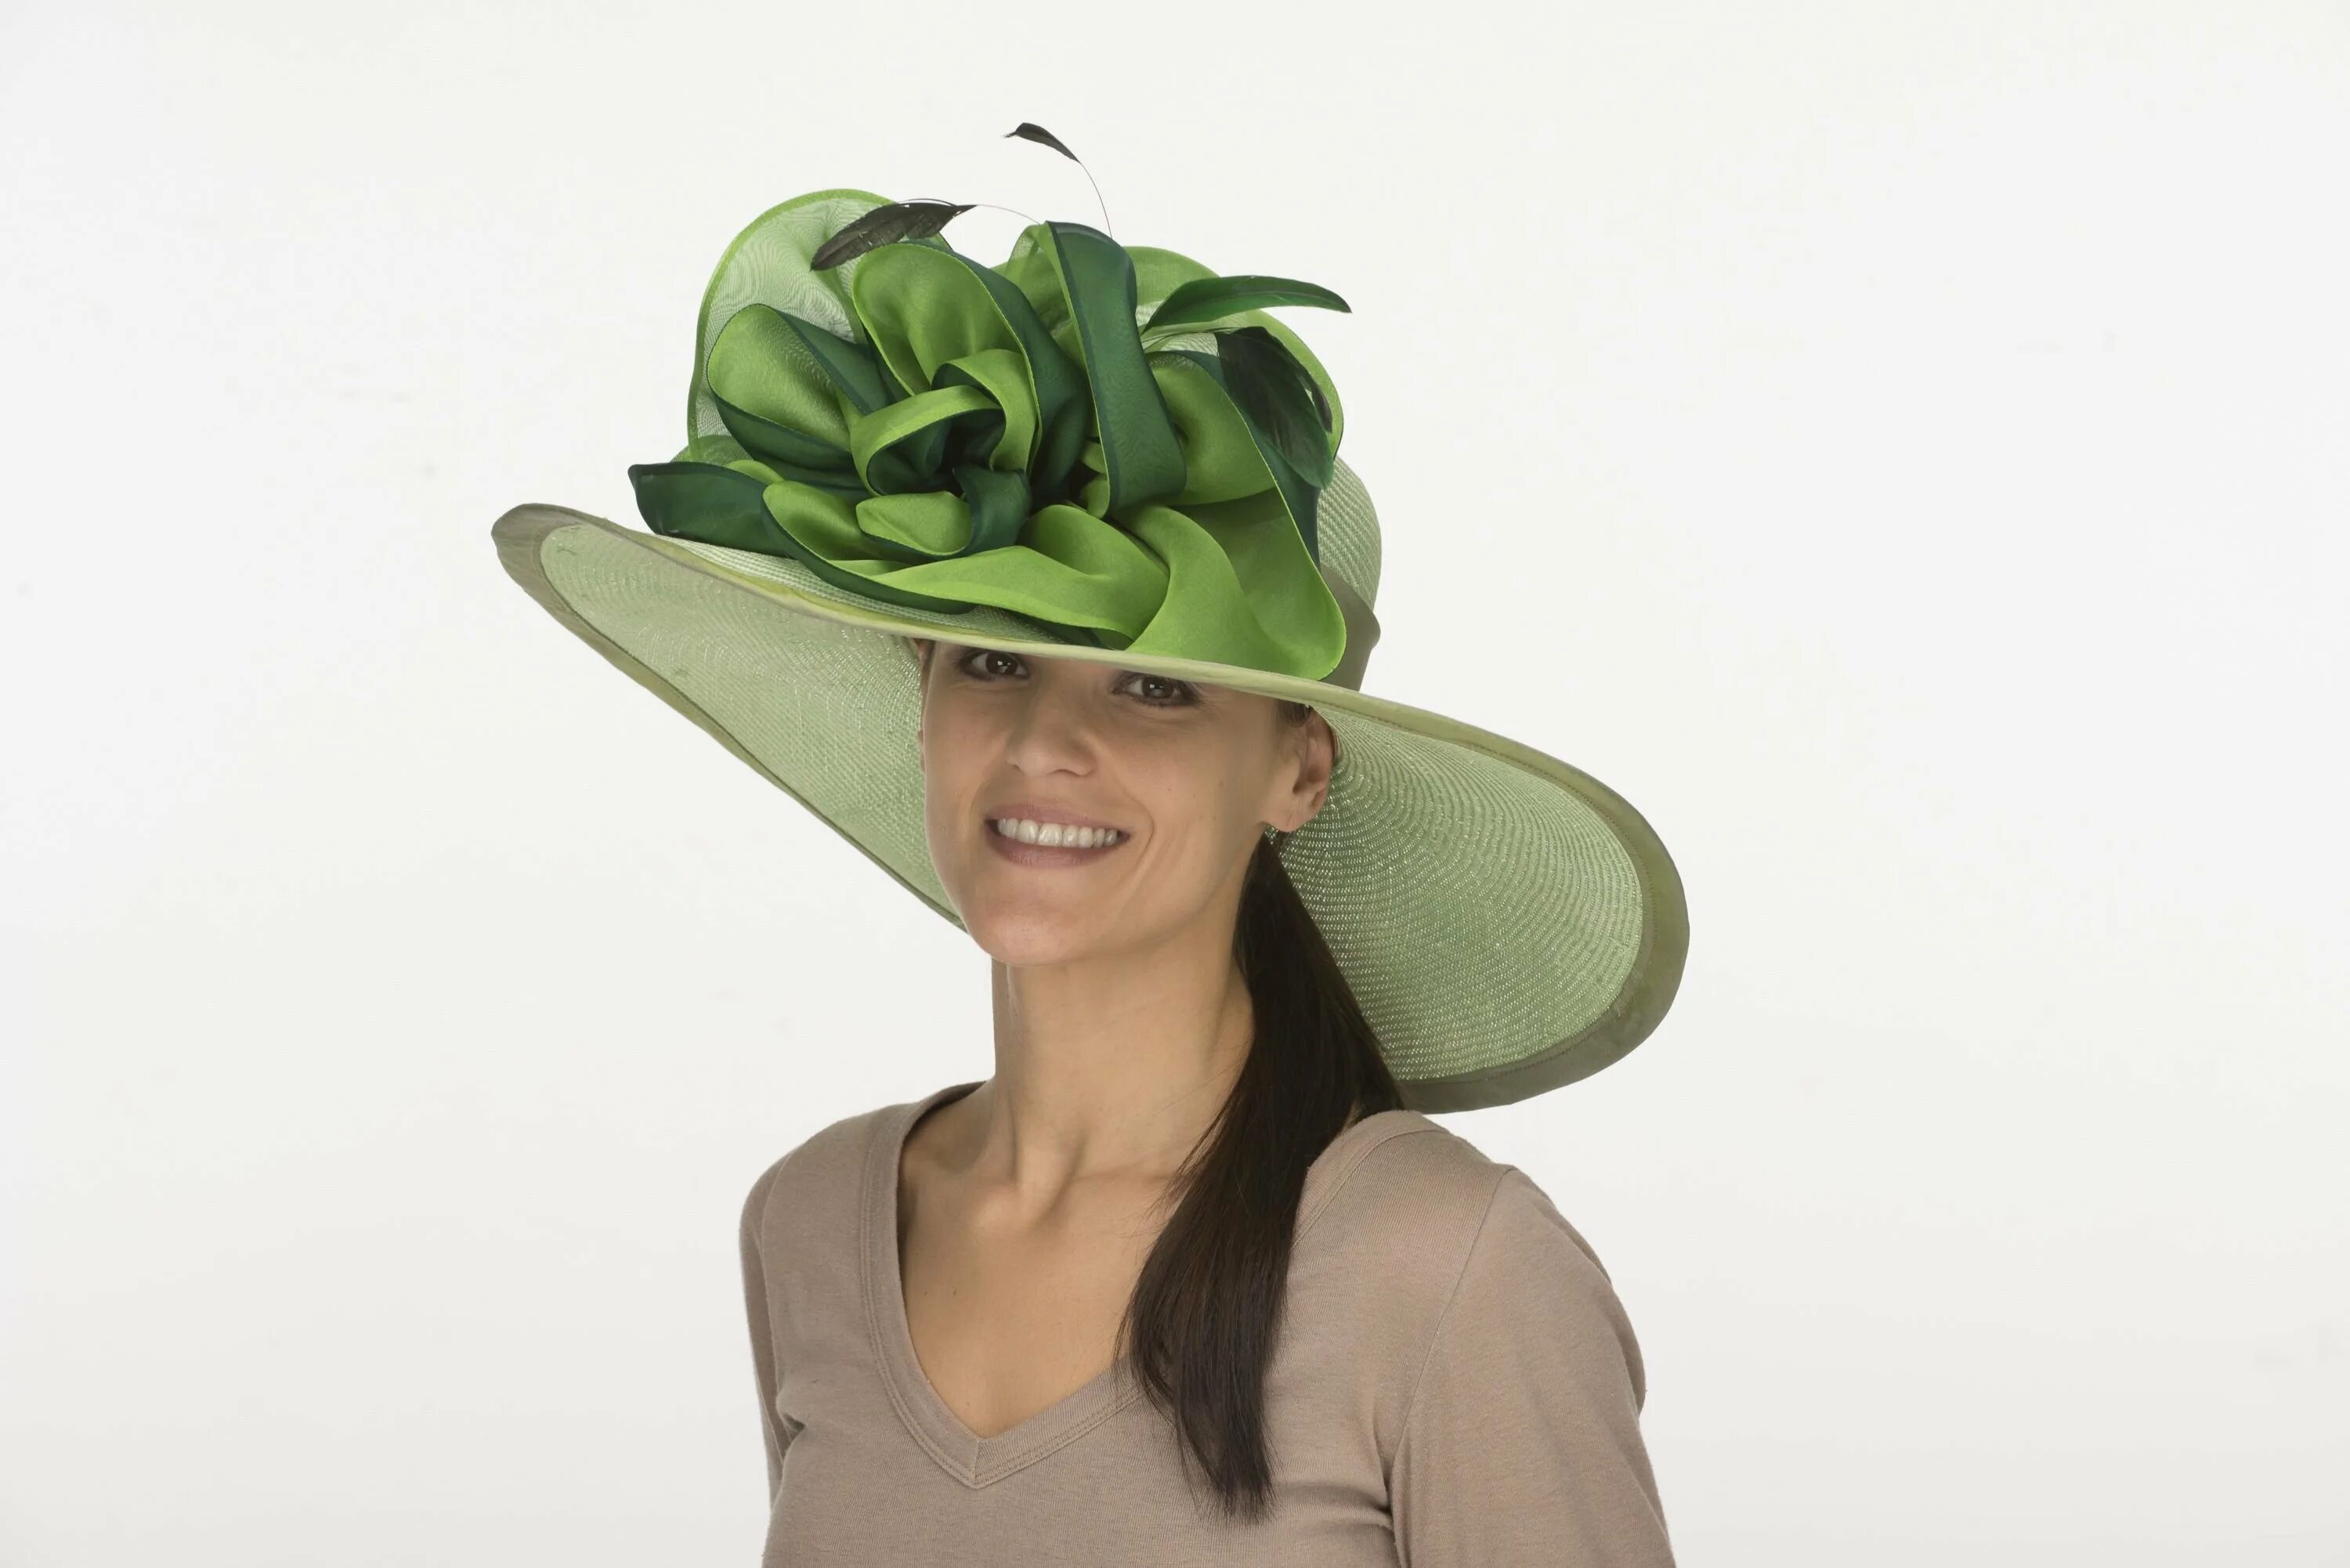 She this hat. Шляпка женская зеленая. Экстравагантные шляпы женские. Стильная зеленая шляпка. Зеленая женская шляпа.